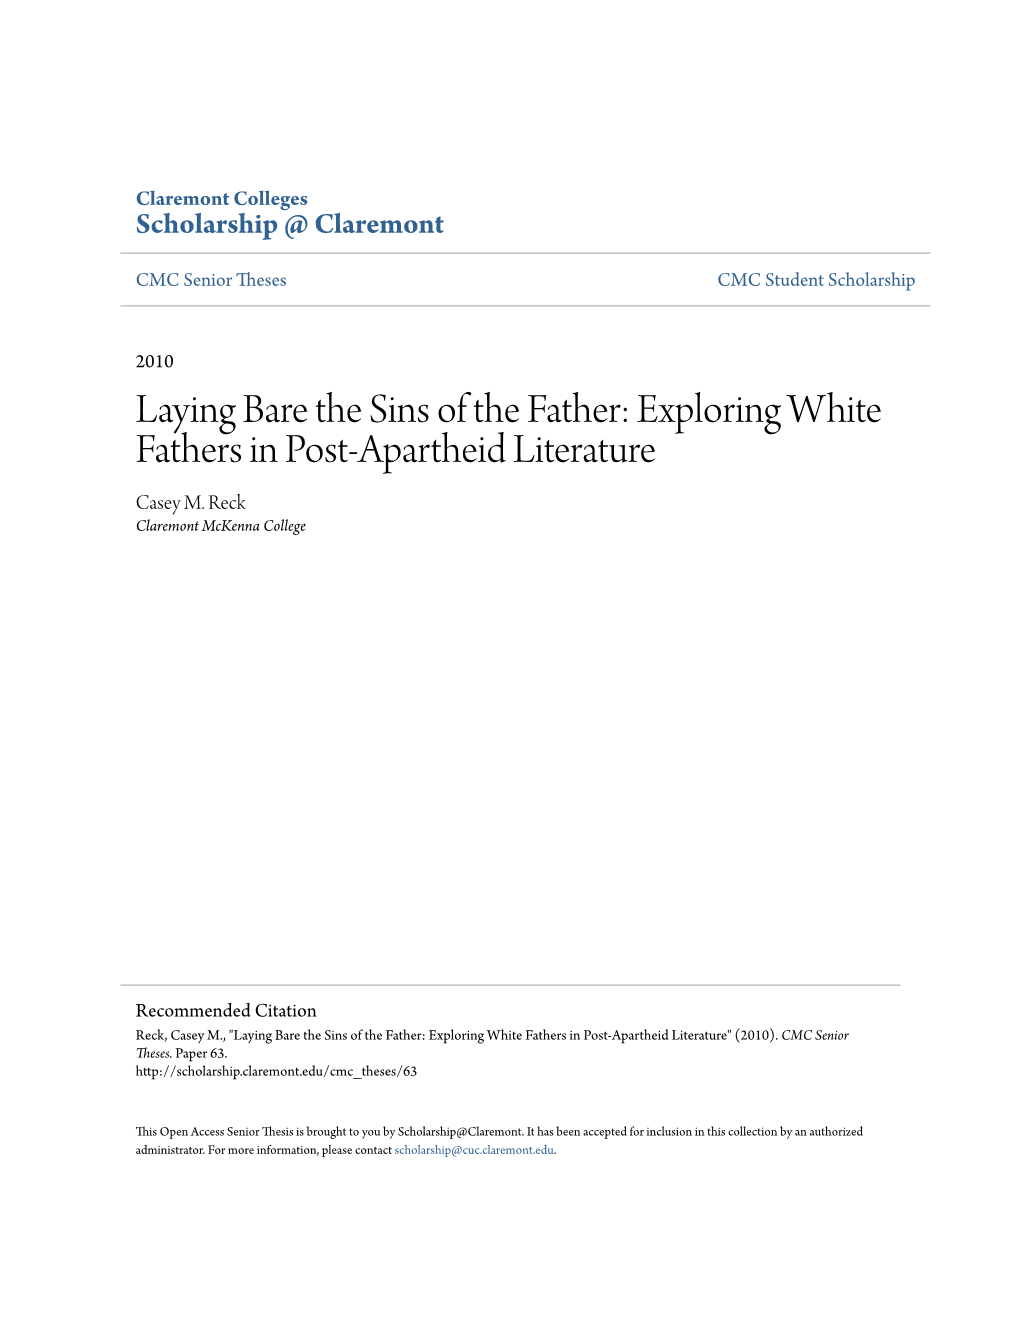 Exploring White Fathers in Post-Apartheid Literature Casey M